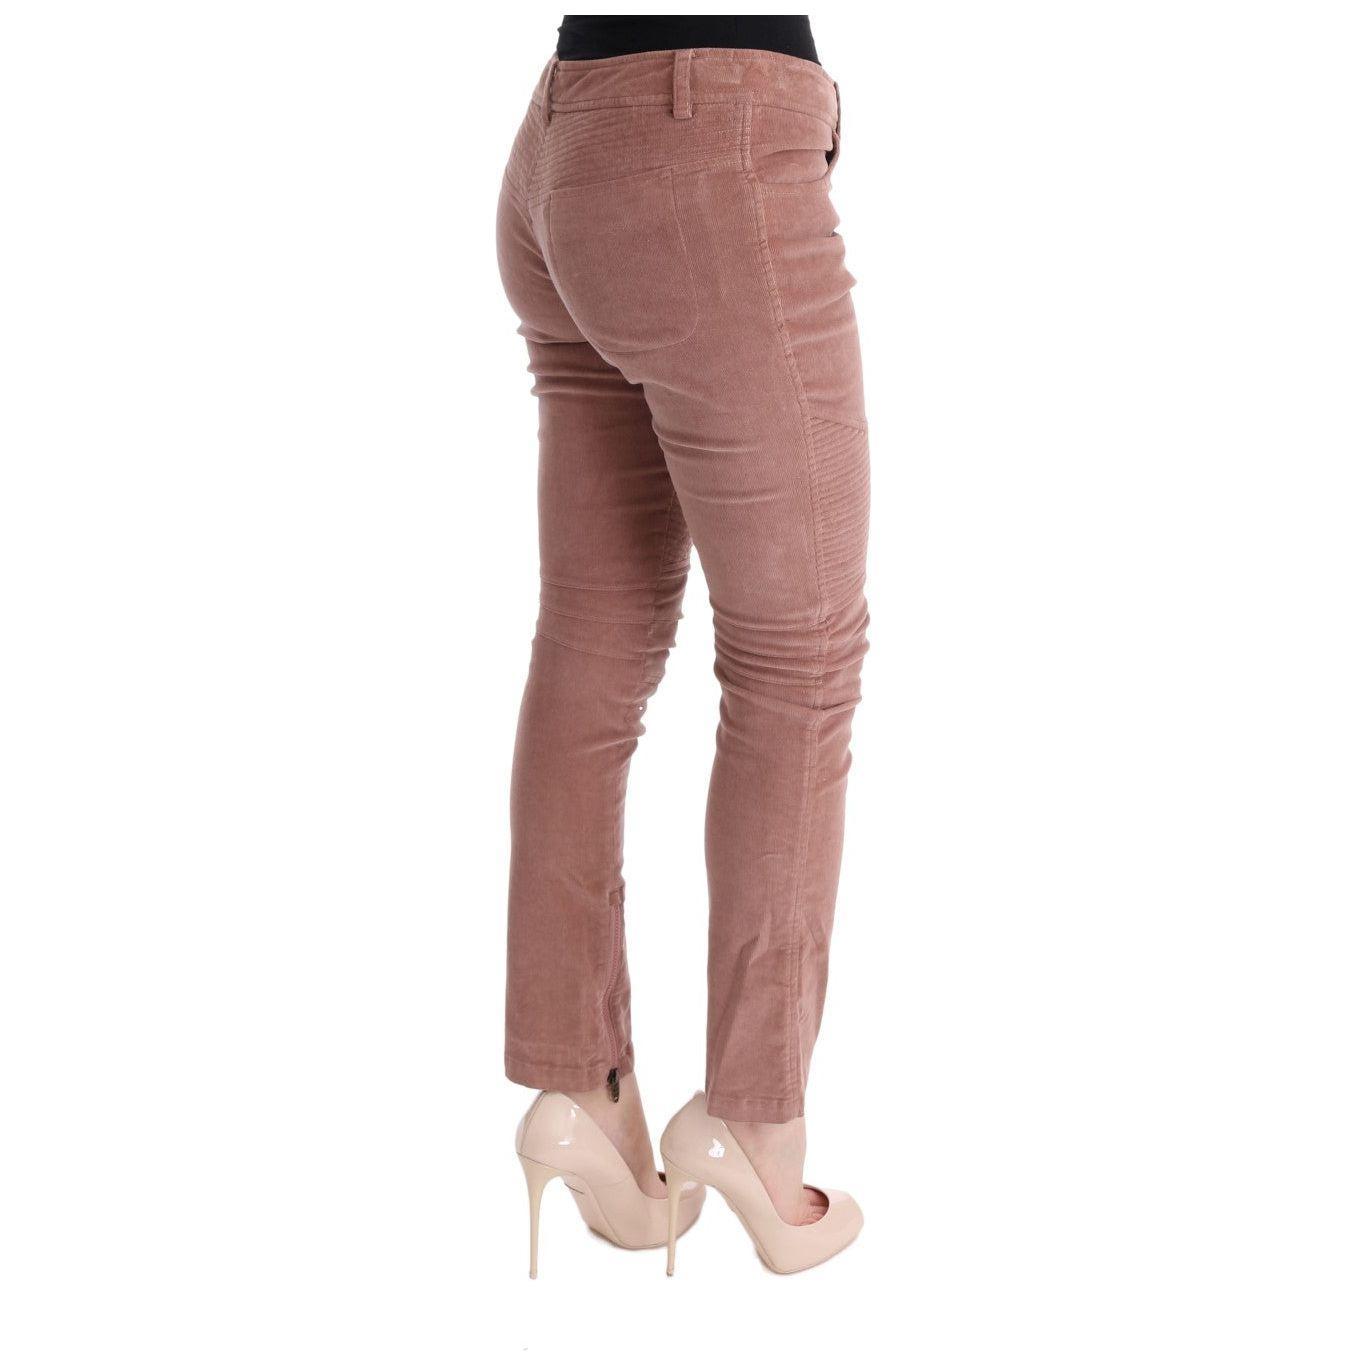 Ermanno Scervino Chic Brown Capri Cropped Pants for Elegant Evenings pink-velvet-cropped-casual-pants 449249-pink-velvet-cropped-casual-pants-3.jpg